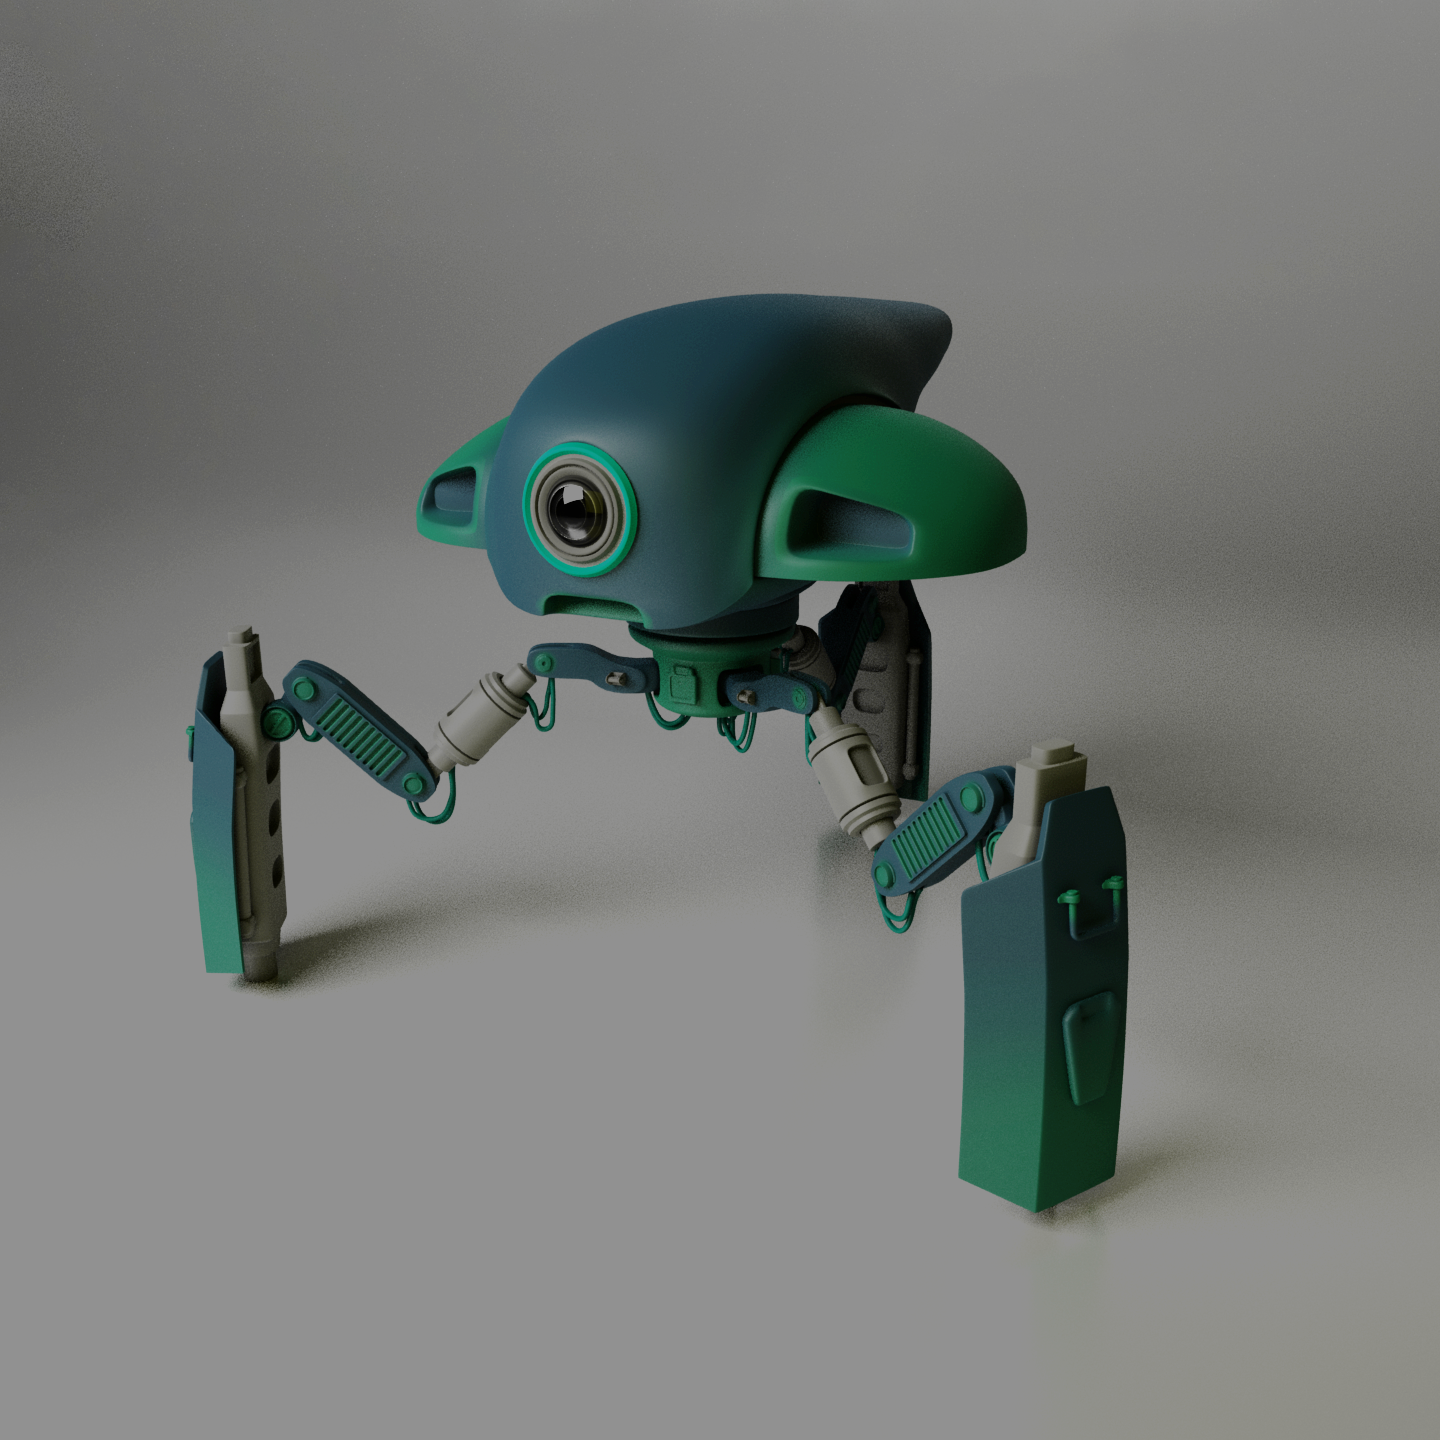 An adorable tripod robot render